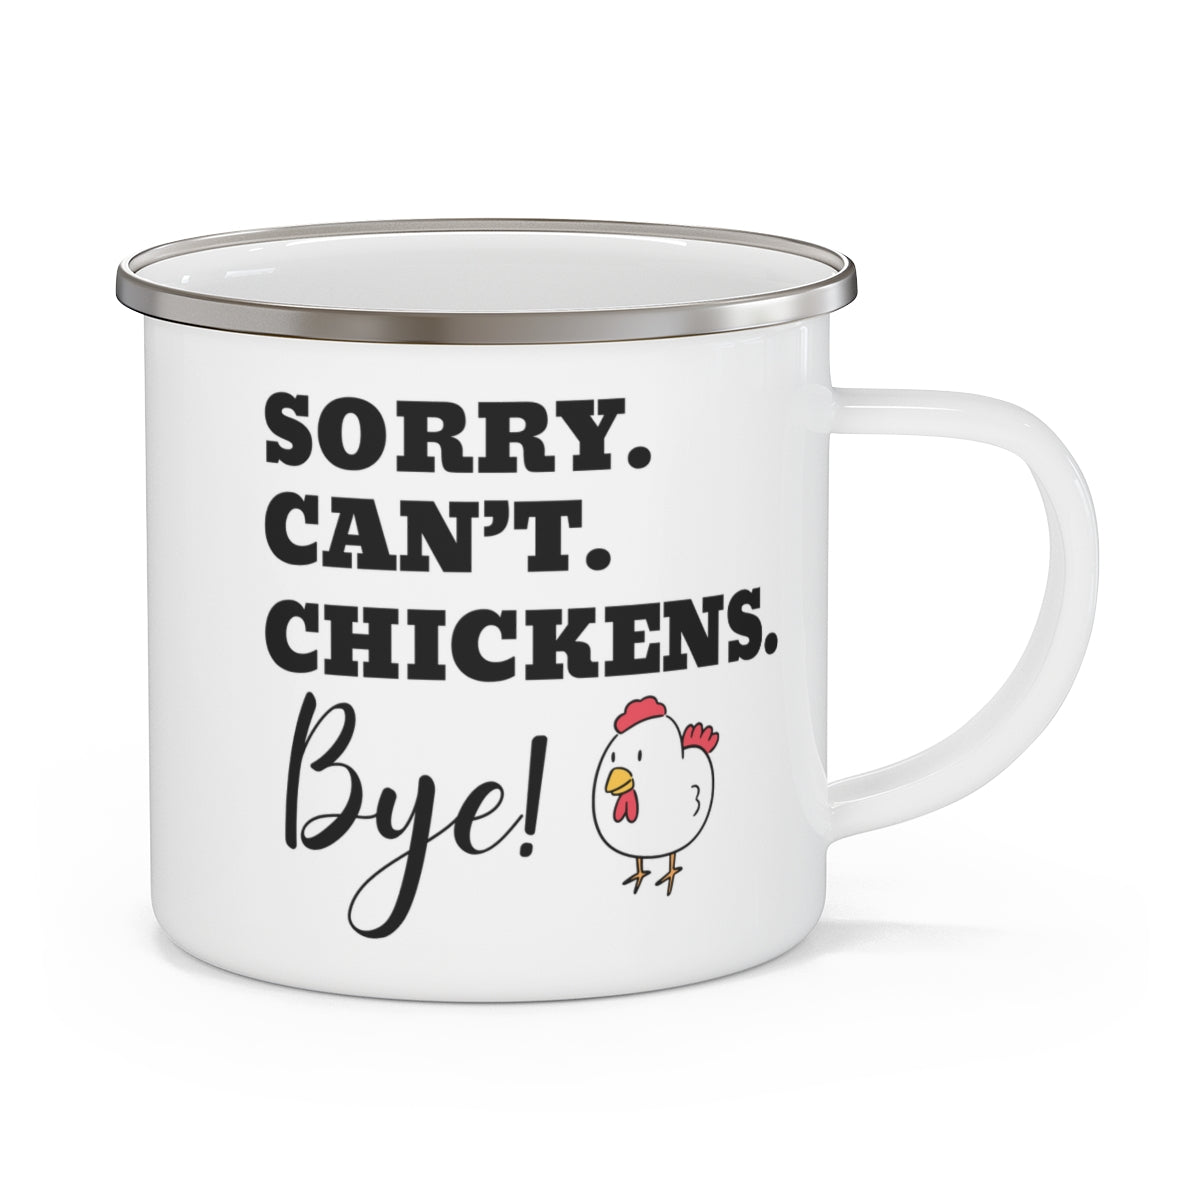 Sorry. Can't. Chickens. Bye! - Enamel Mug